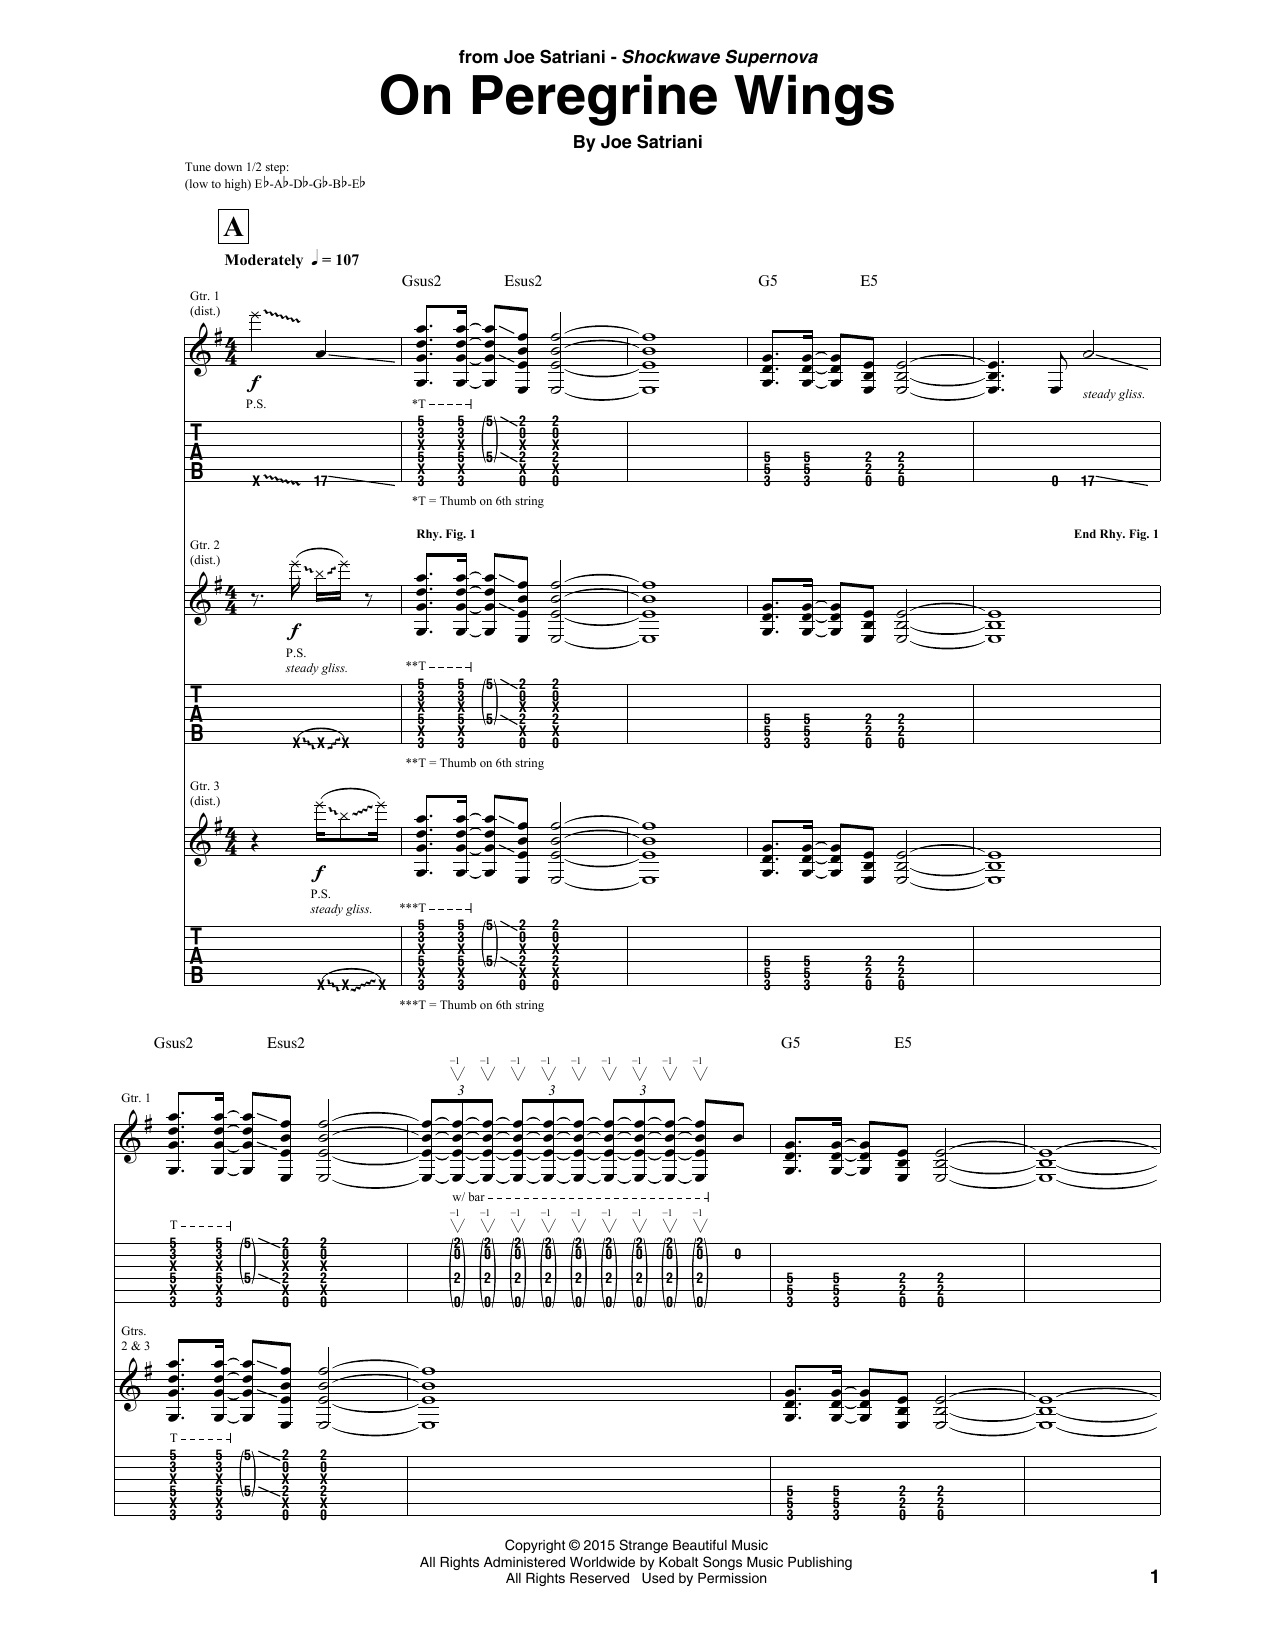 Joe Satriani On Peregrine Wings Sheet Music Notes & Chords for Guitar Tab - Download or Print PDF